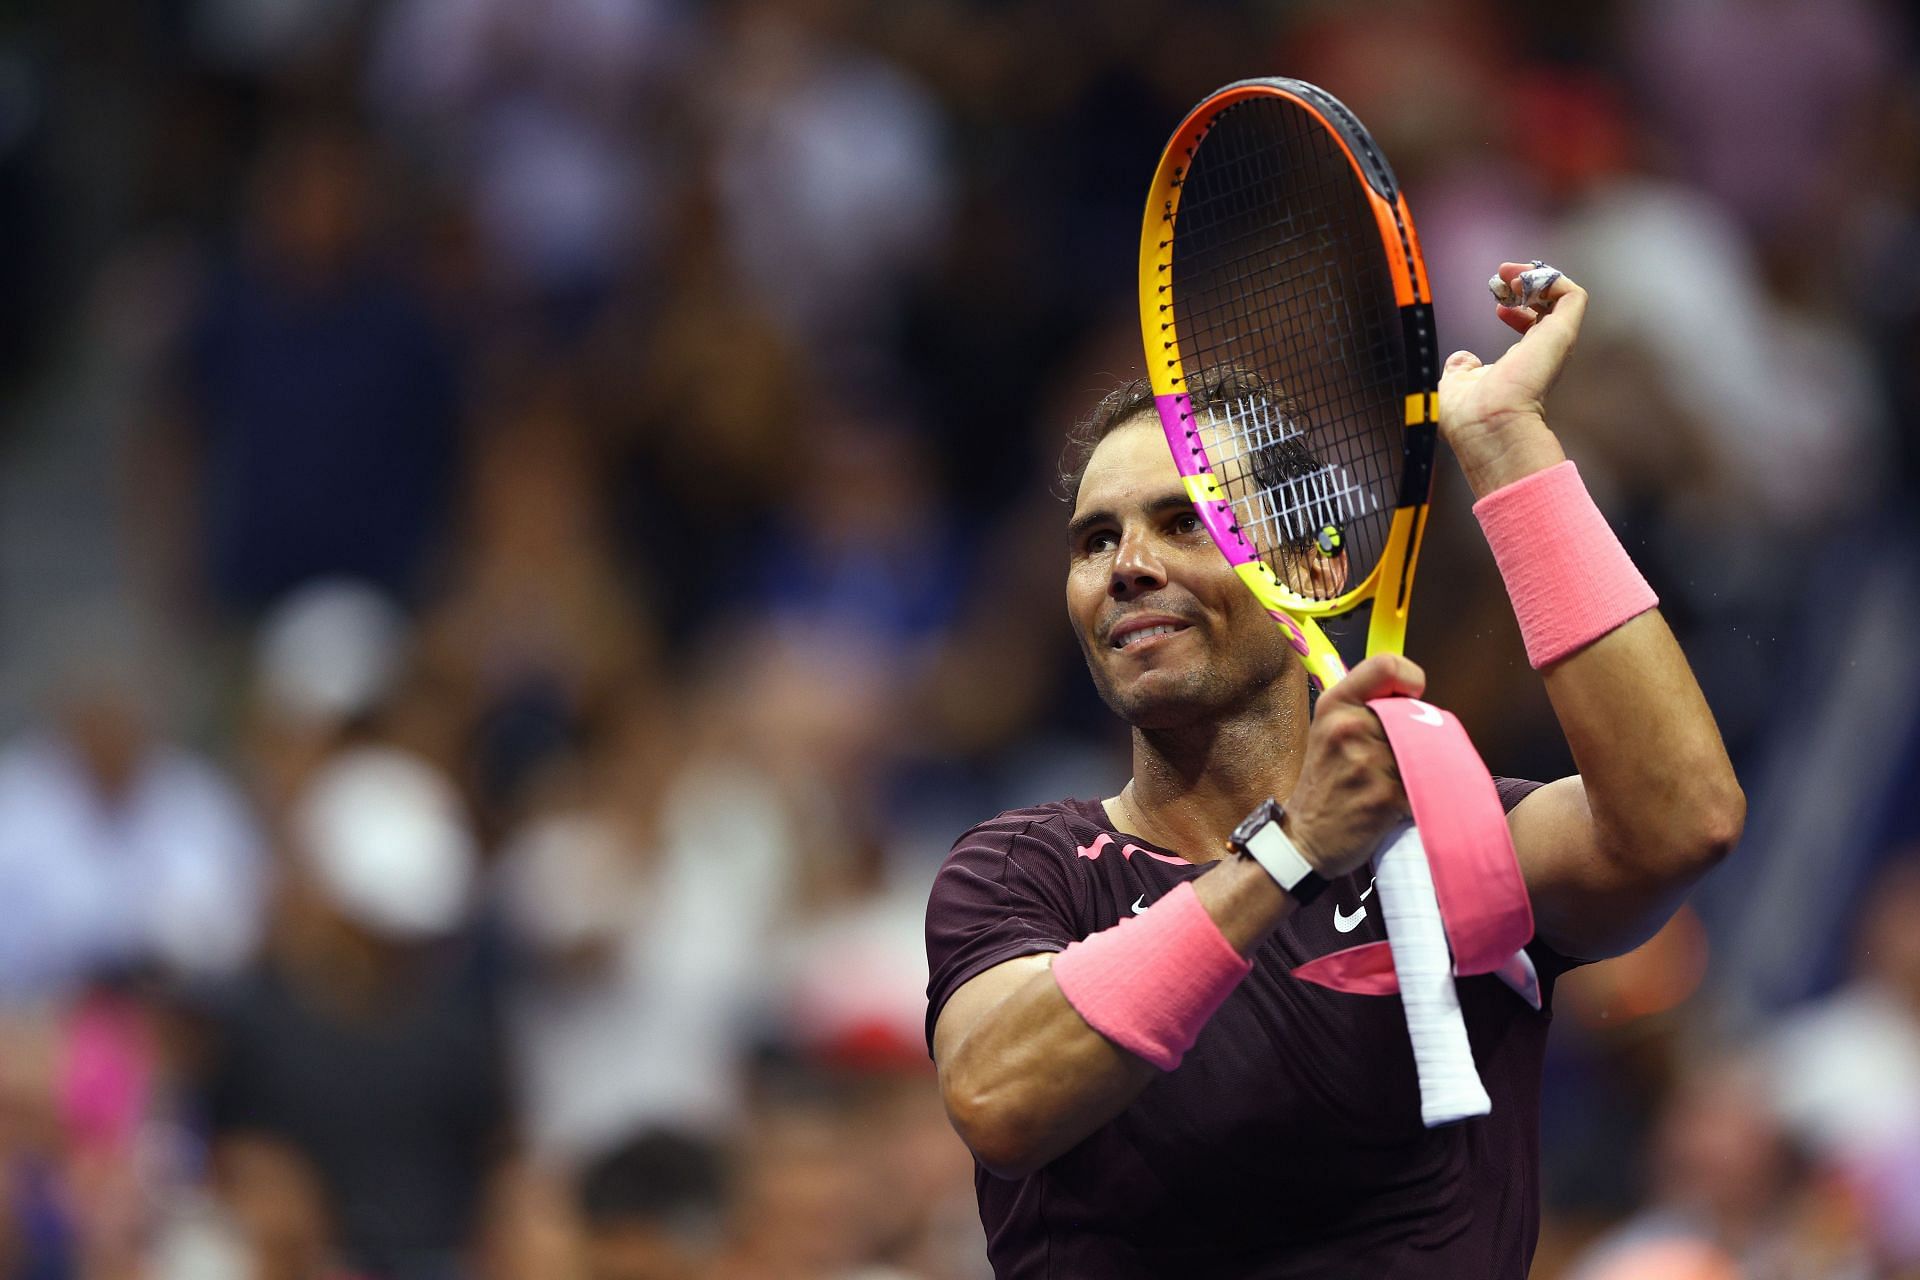 Rafael Nadal at the US Open